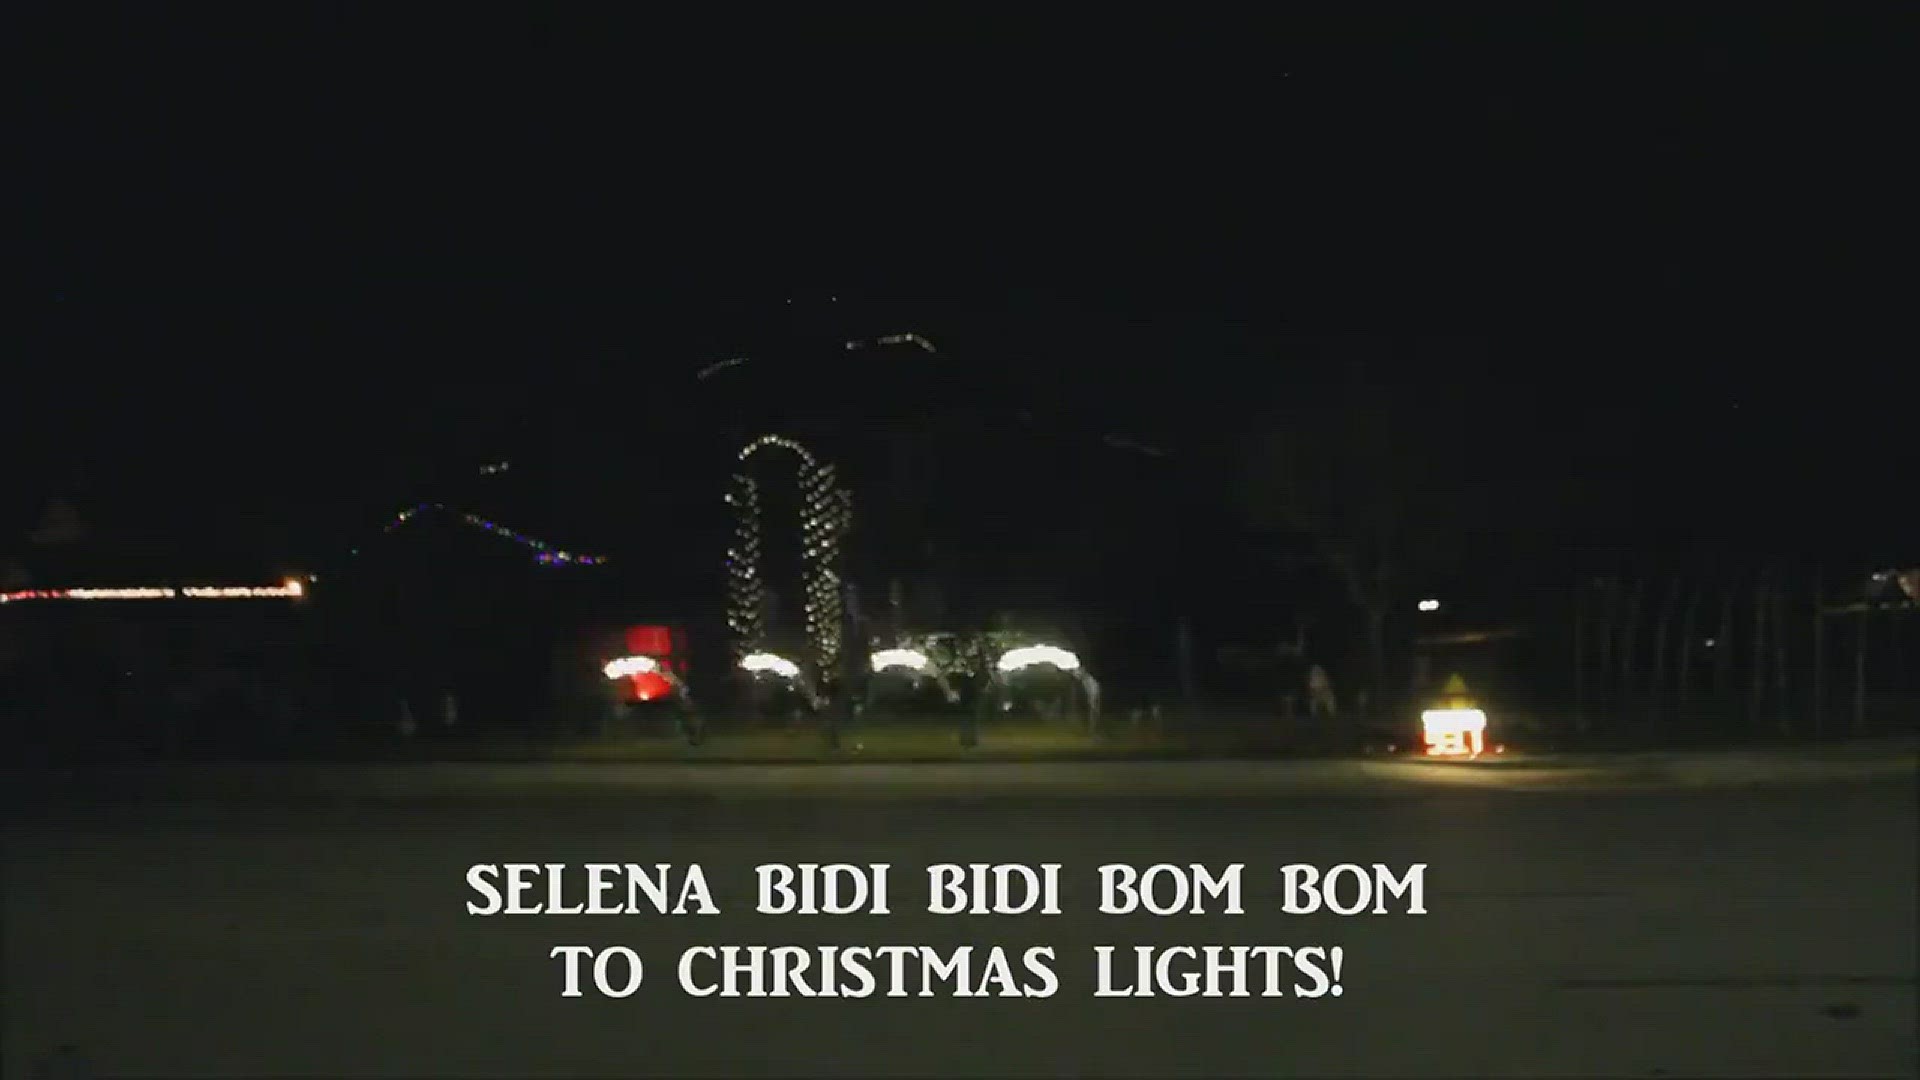 The Hinojosa family in Boerne, Texas synced up their holiday lights to Selena's "Bidi Bidi Bom Bom." Video: Hinojosa Family